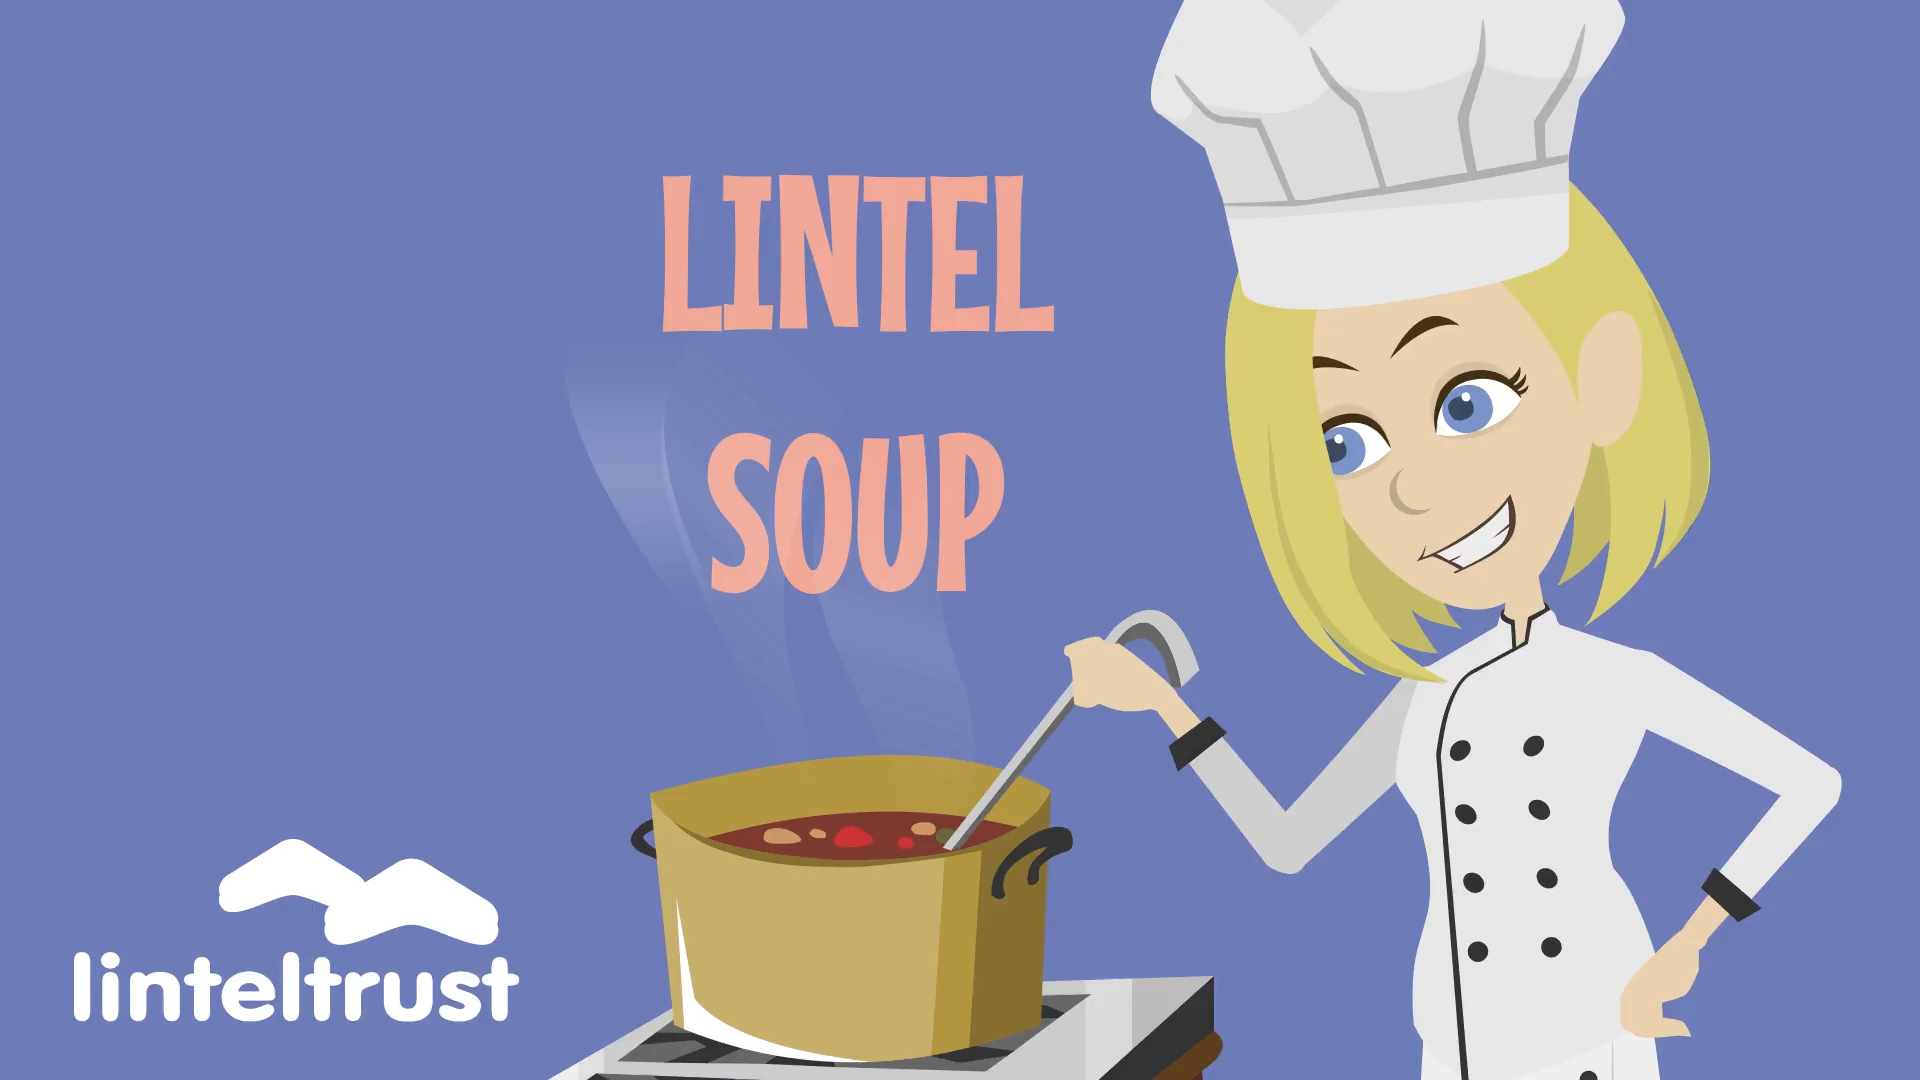 Lintel Soup set to serve up cash to community projects